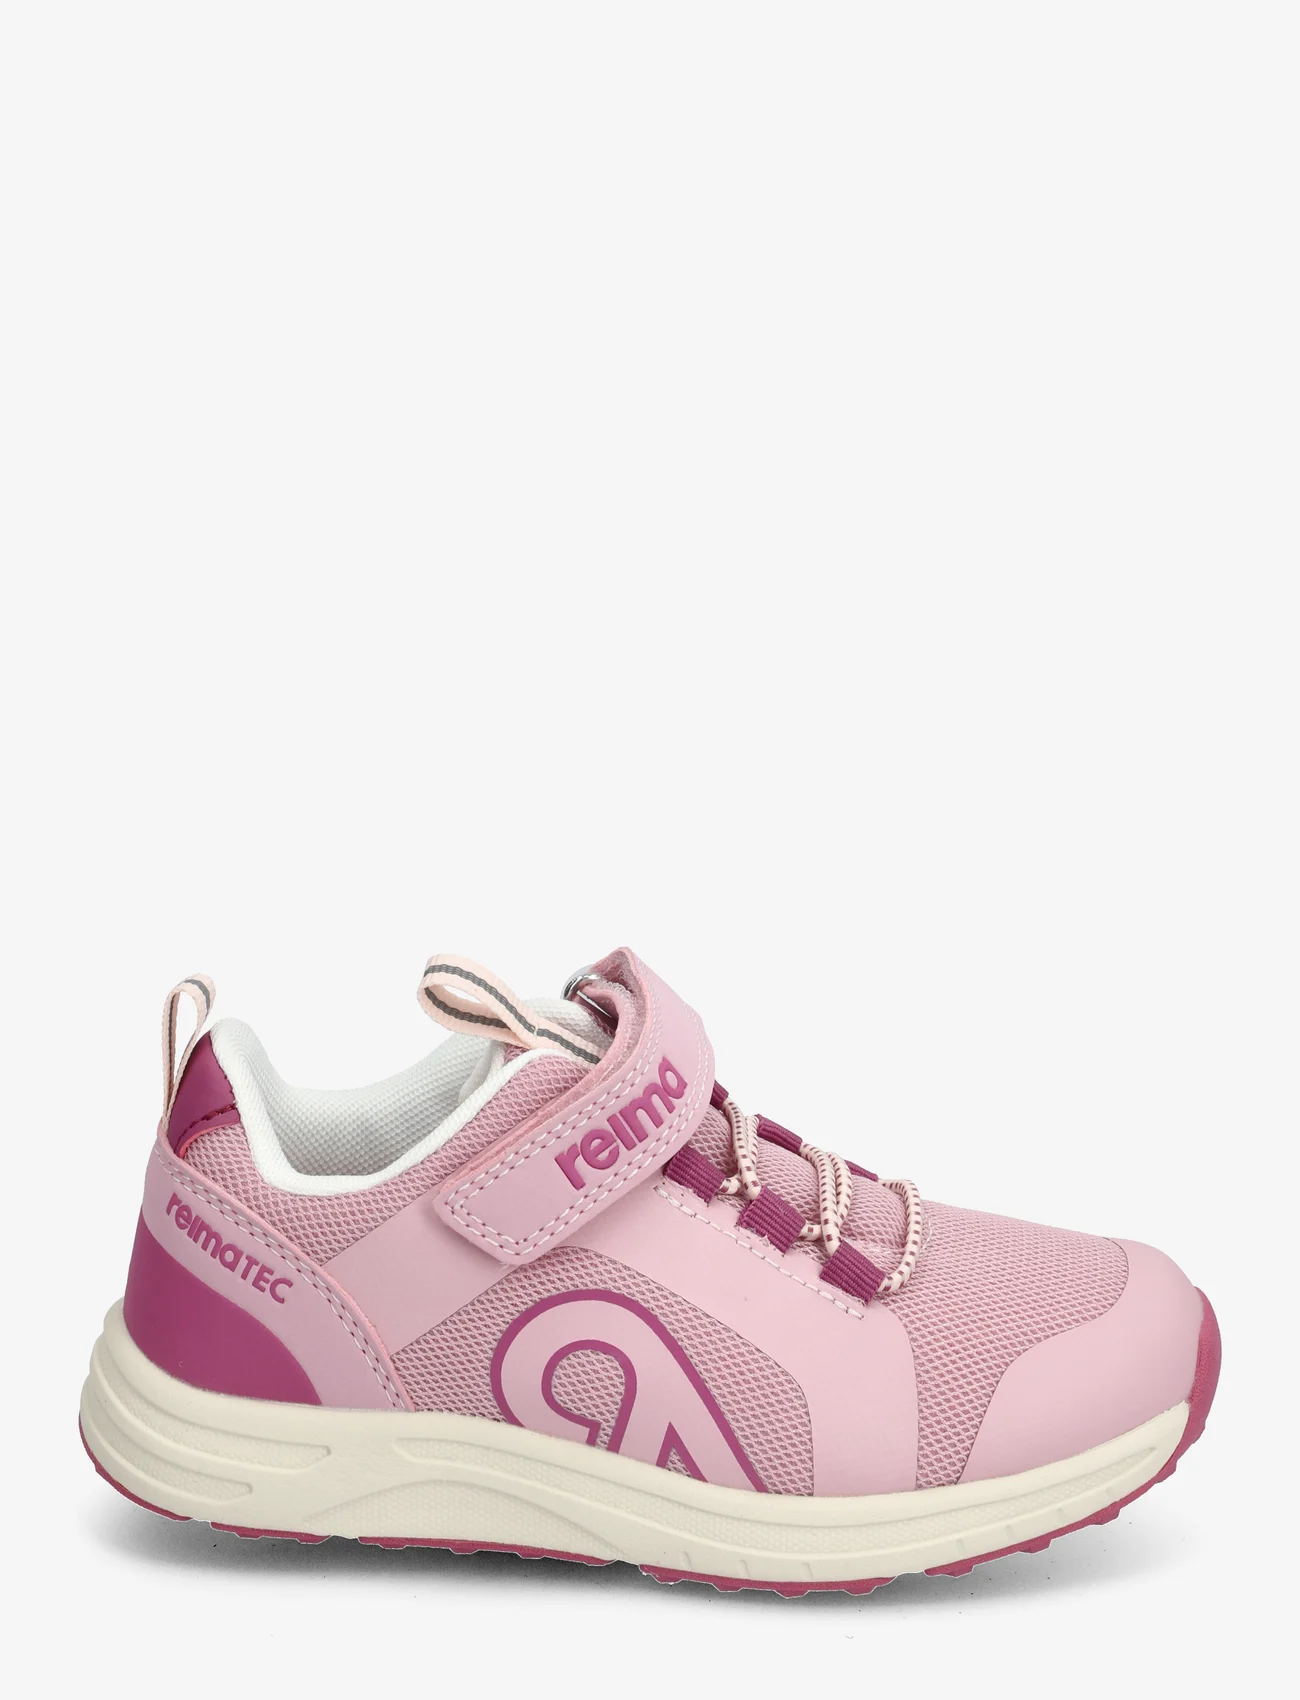 Reima - Reimatec shoes, Enkka - barn - grey pink - 1